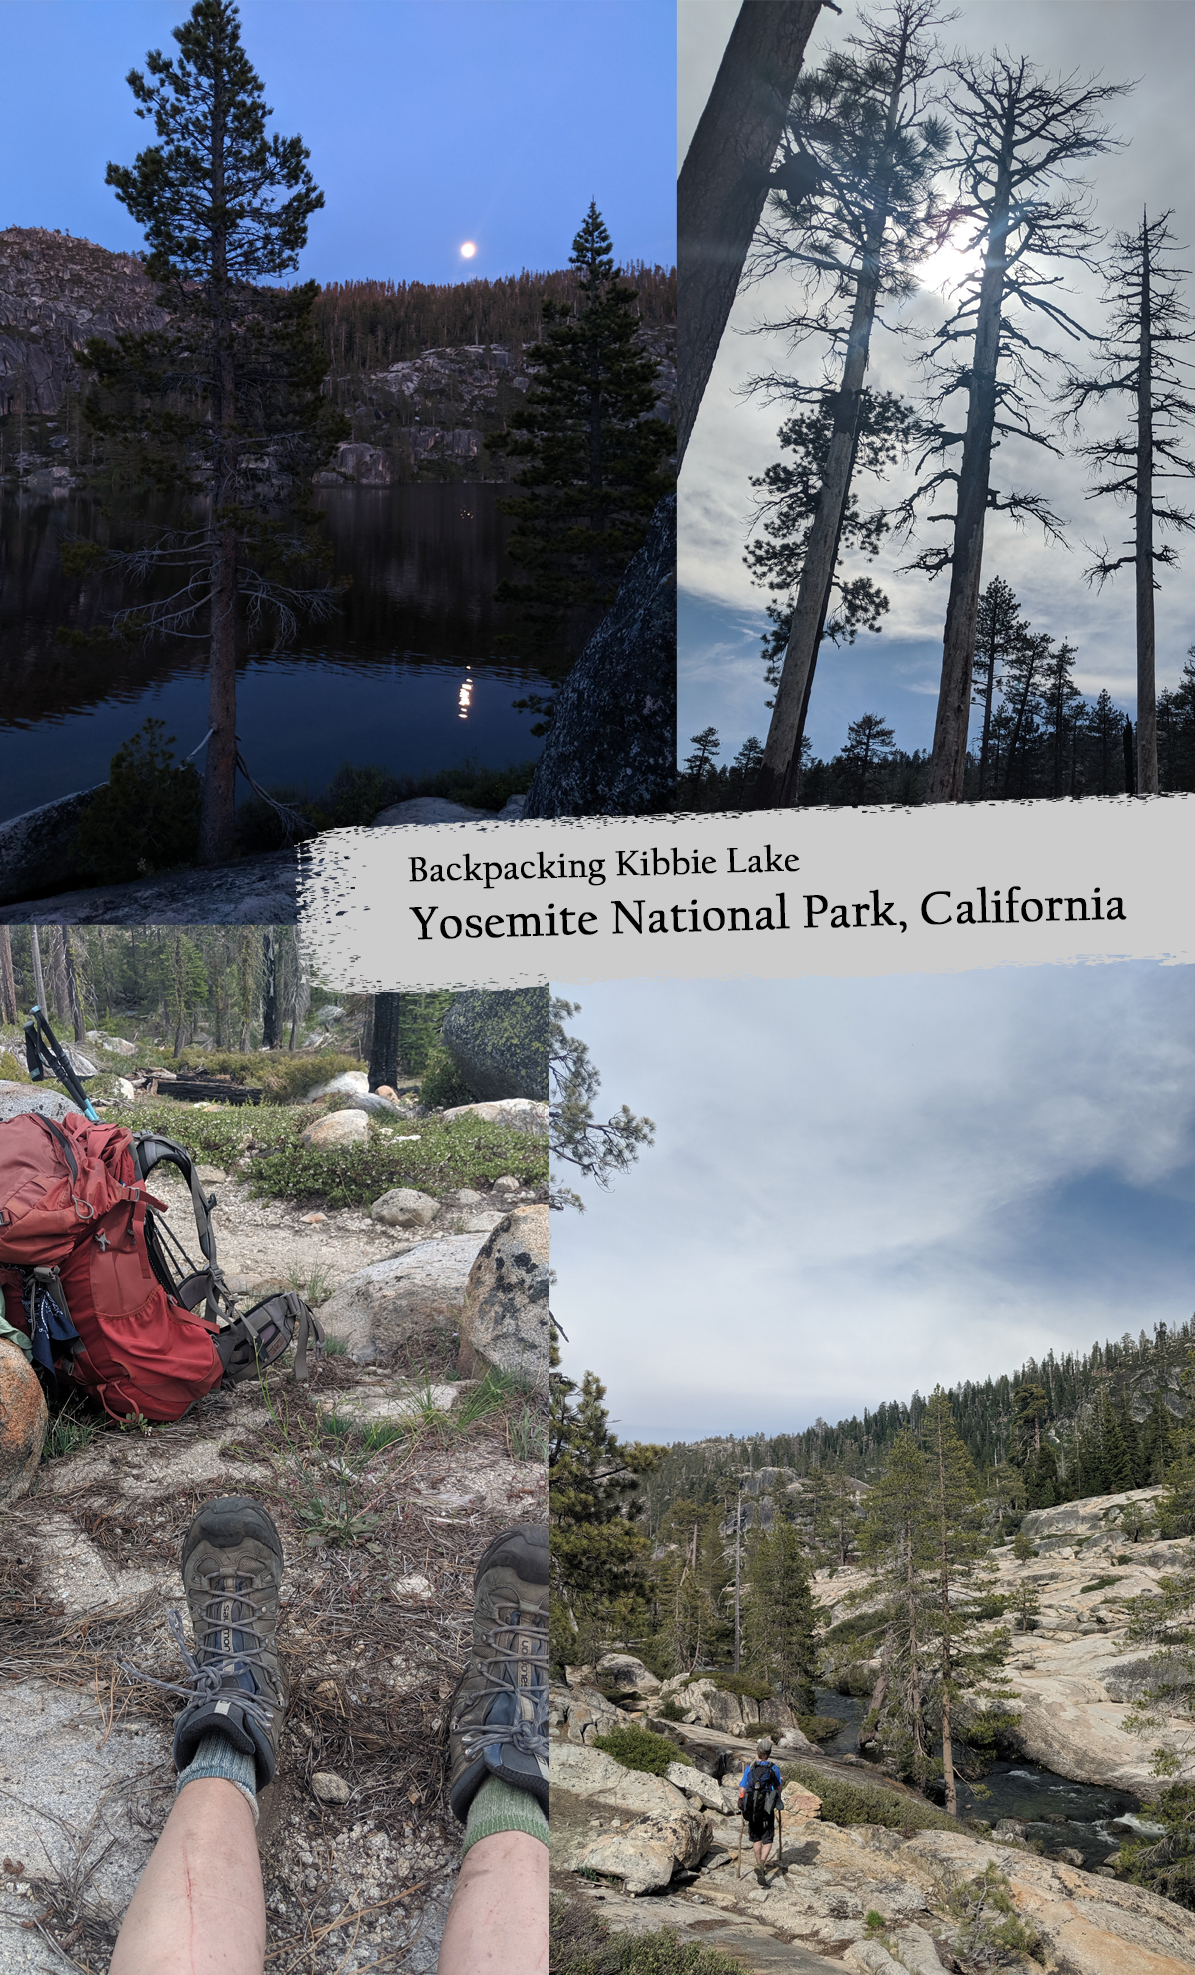 Kibbie Lake Backpacking, Yosemite